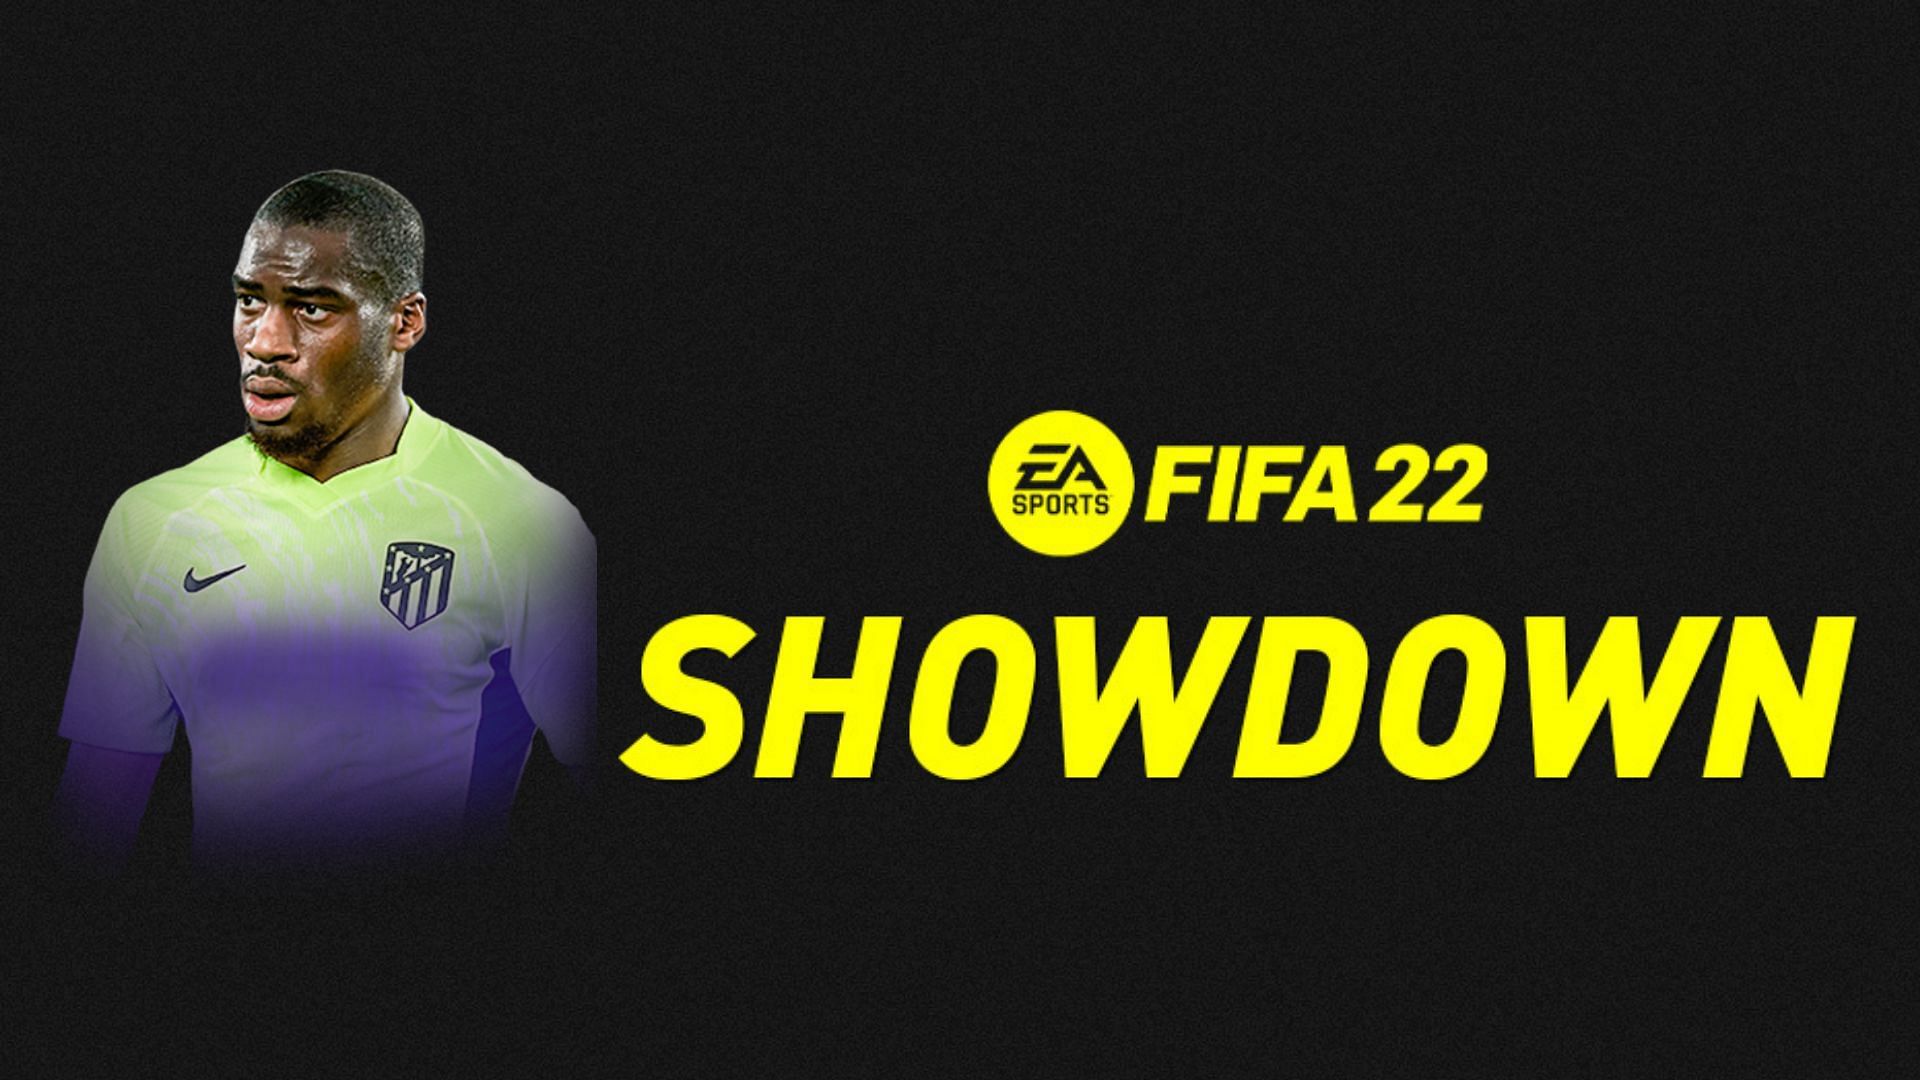 Geoffrey Kondogbia Showdown SBC is live in FIFA 22 Ultimate Team (Image via Sportskeeda)